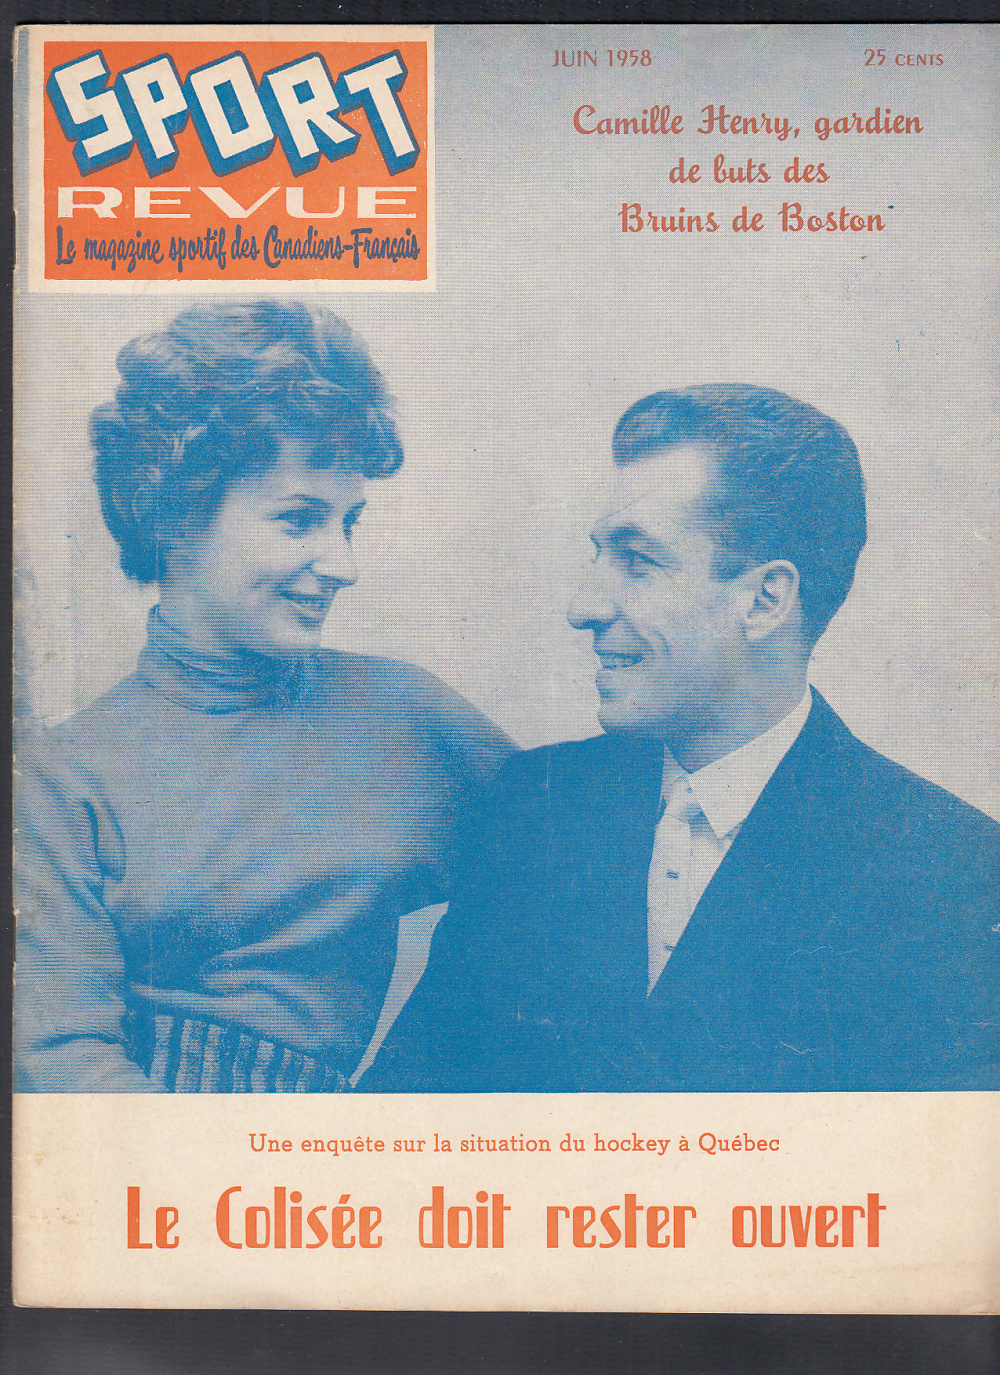 1958 SPORT REVUE MAGAZINE B. BOUCHARD ON COVER photo